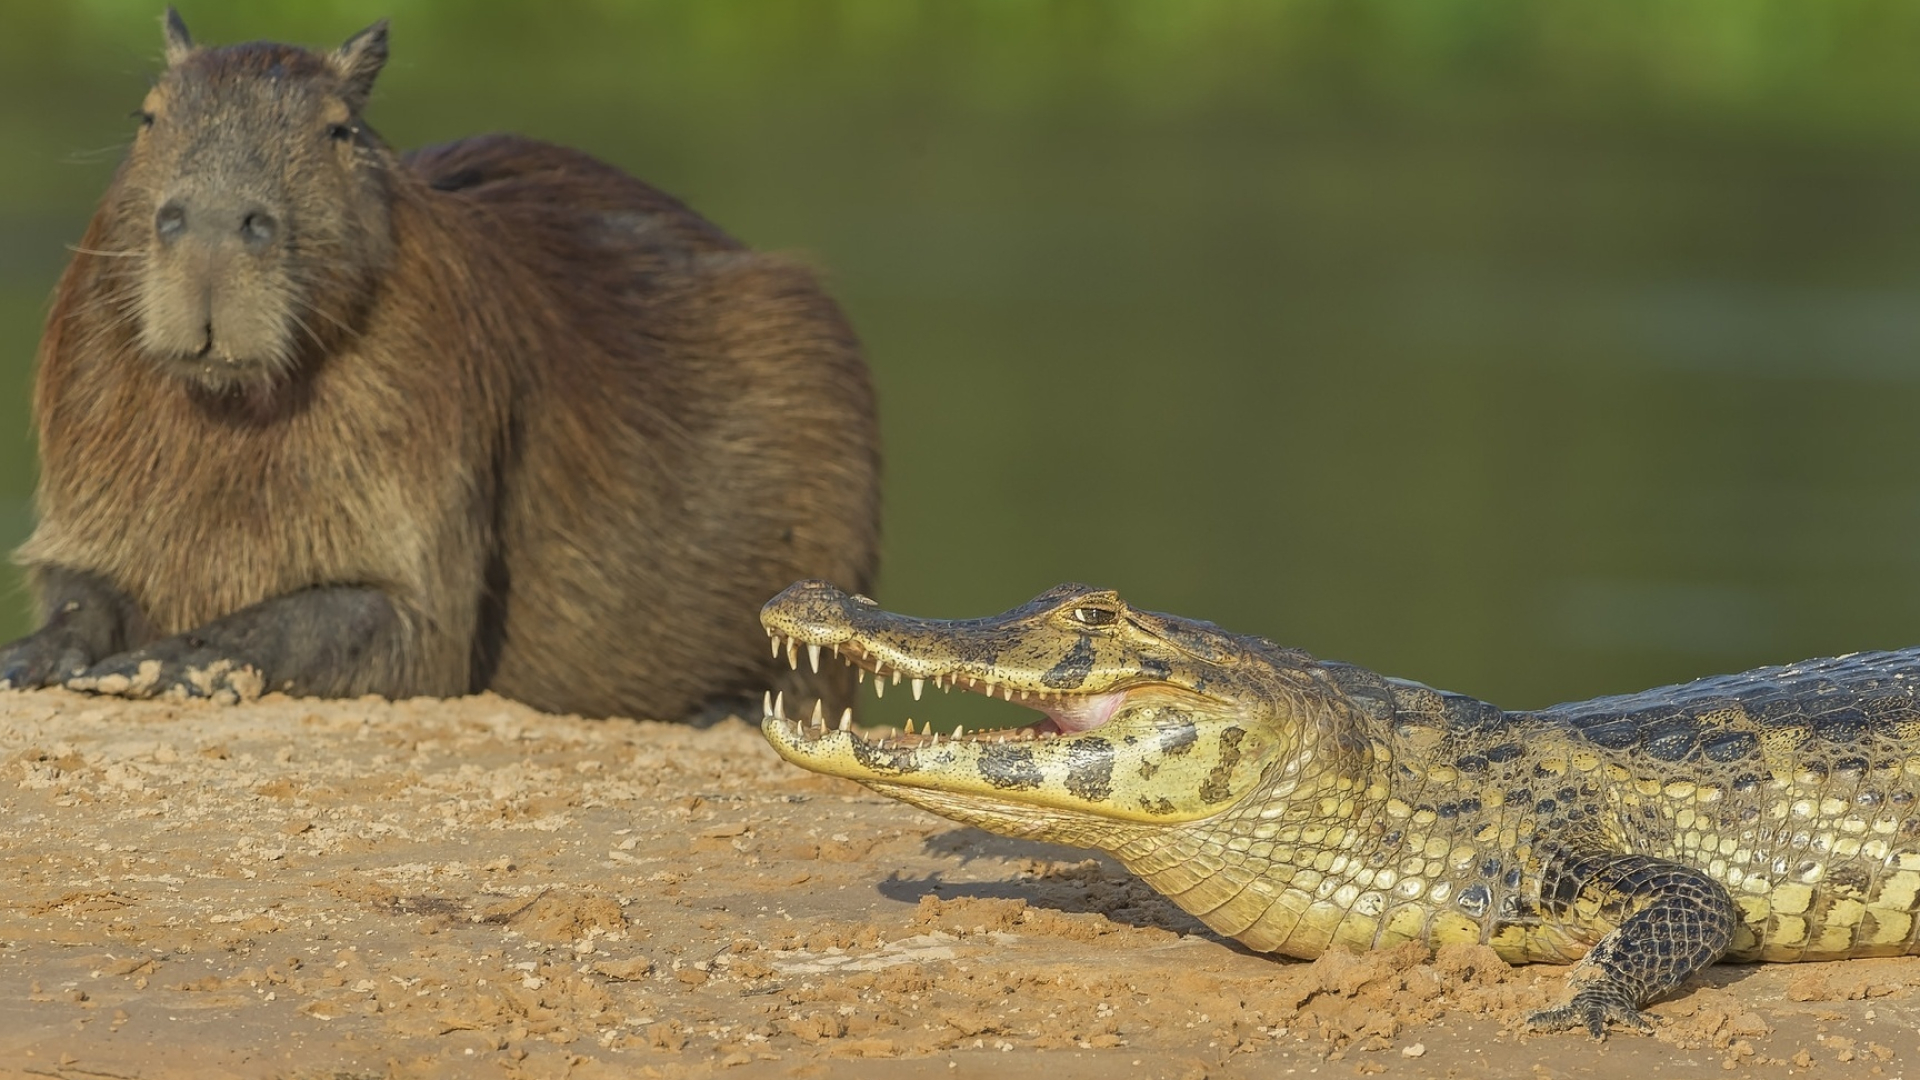 Crocodile and capybara, Tierisch, German animal, Wallpaper download, 1920x1080 Full HD Desktop